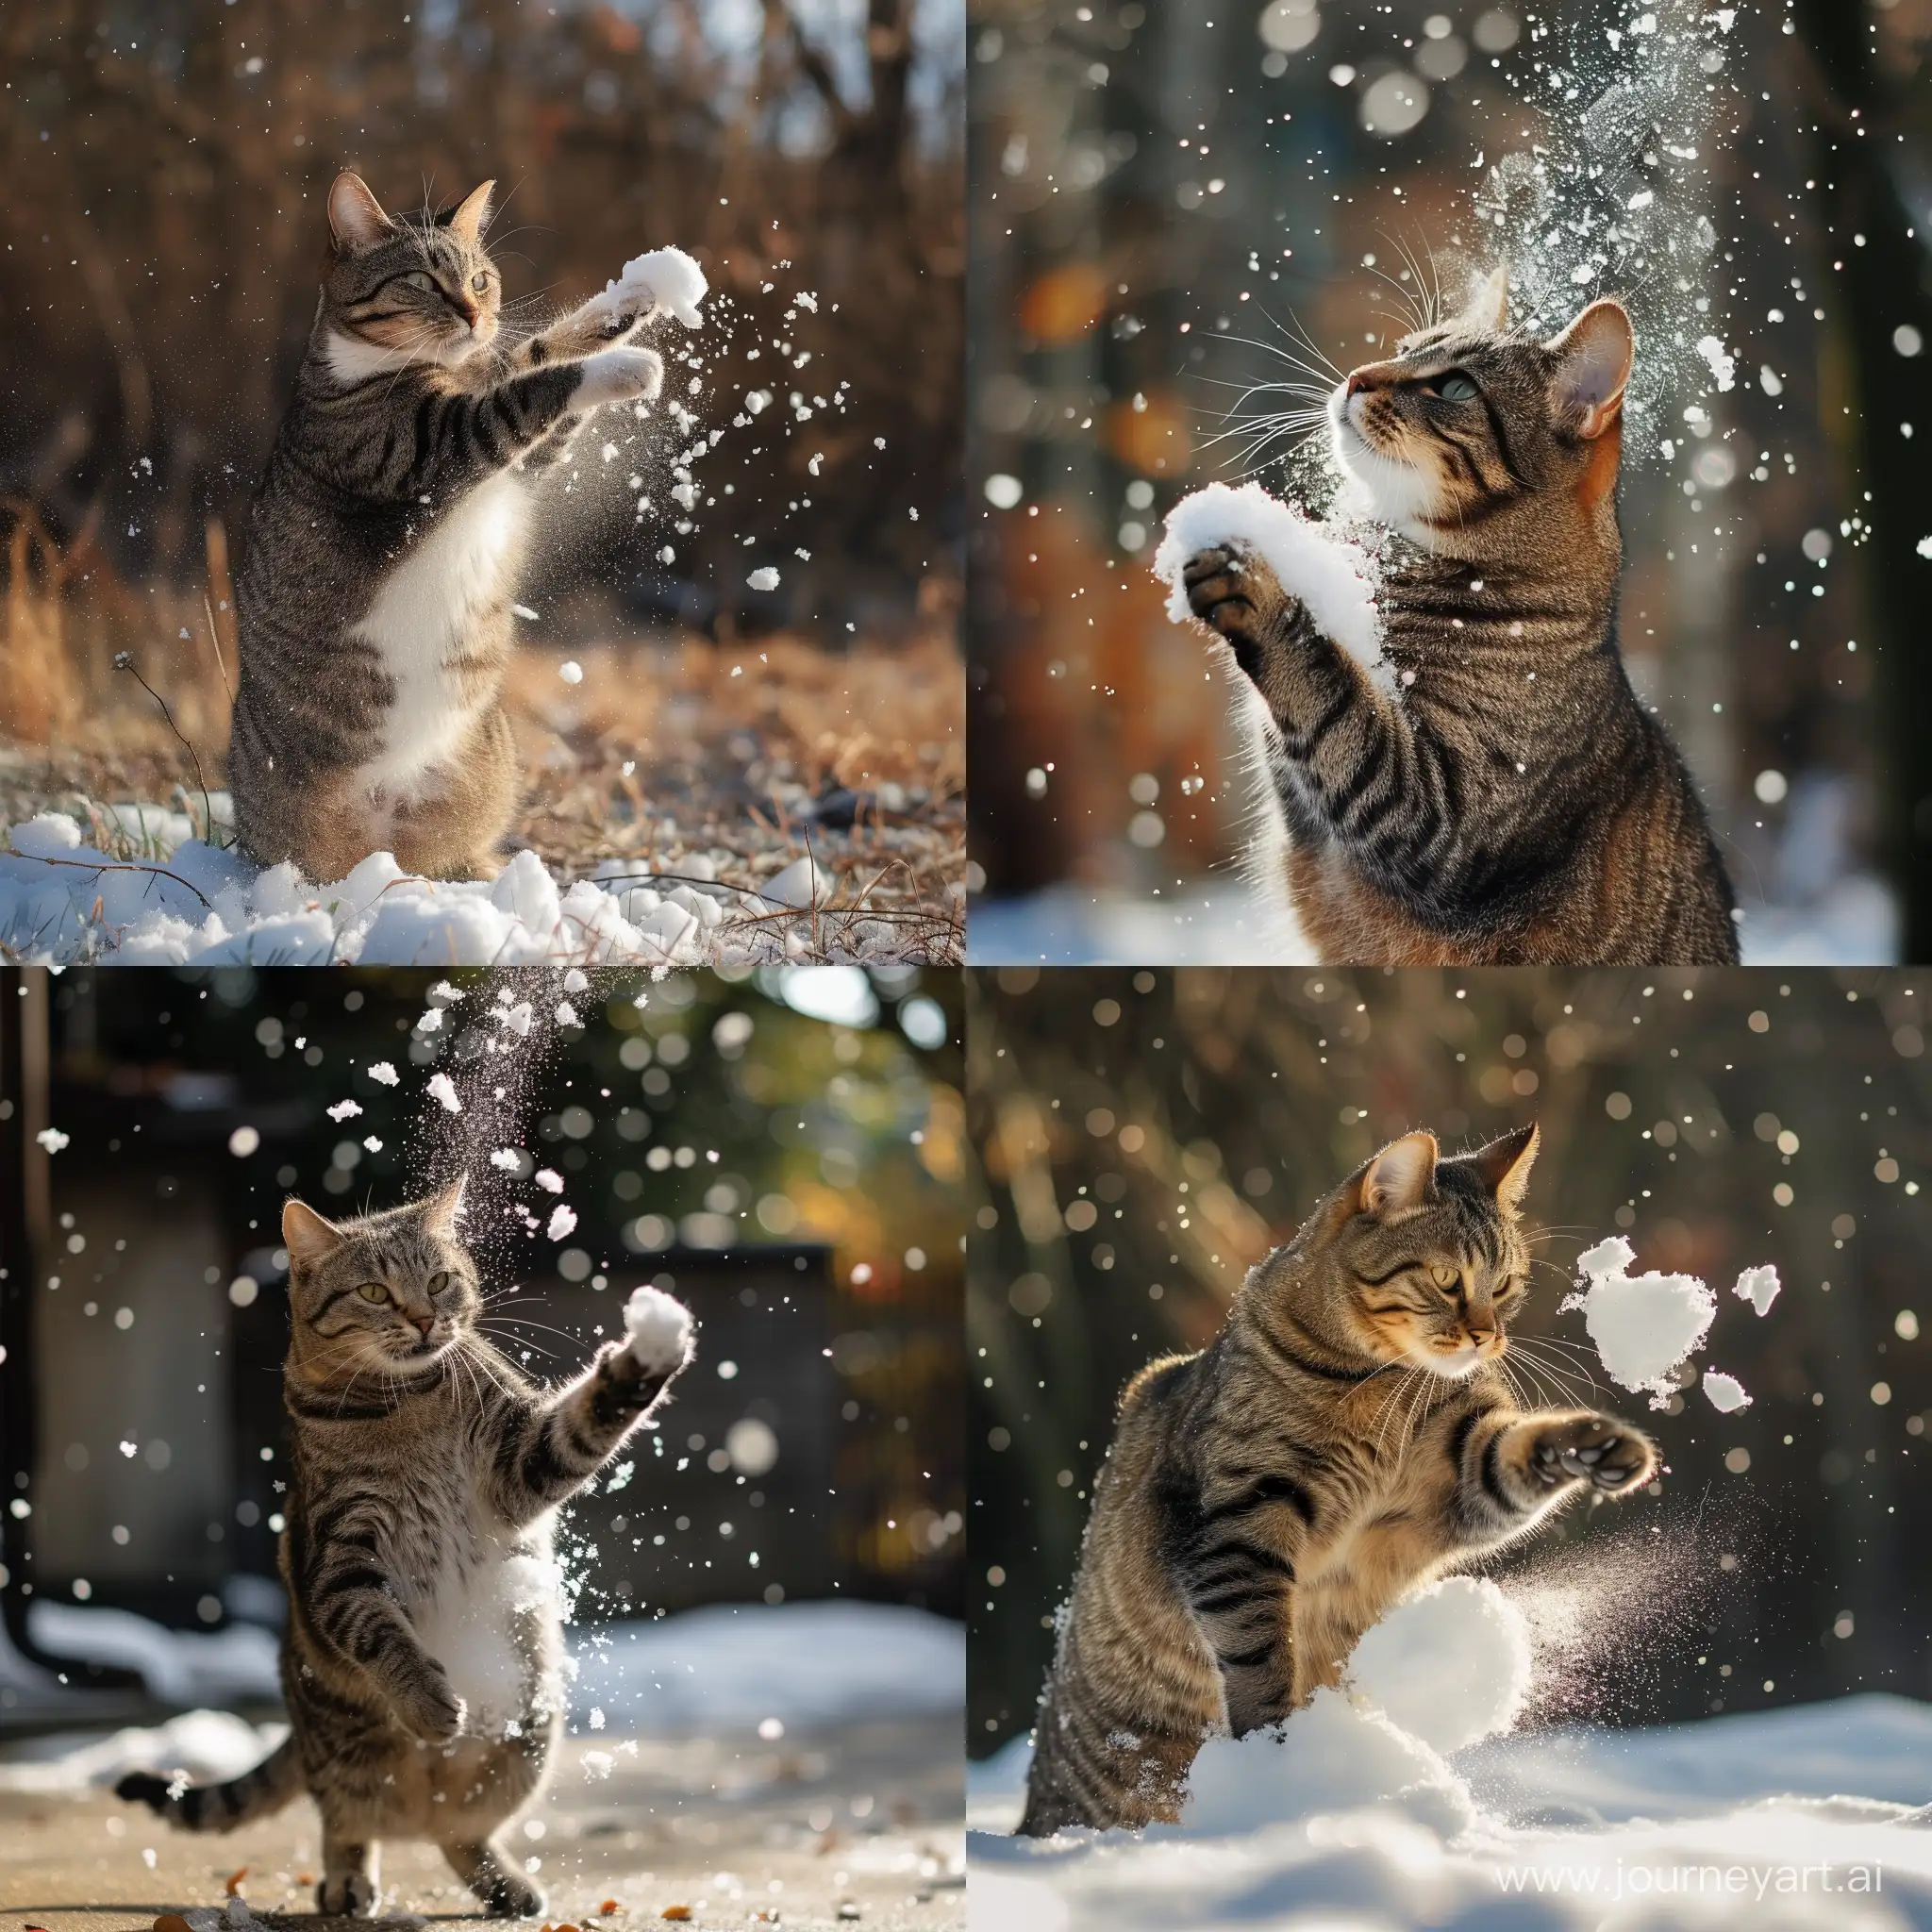 Playful-Cat-Throwing-Snow-in-Winter-Wonderland